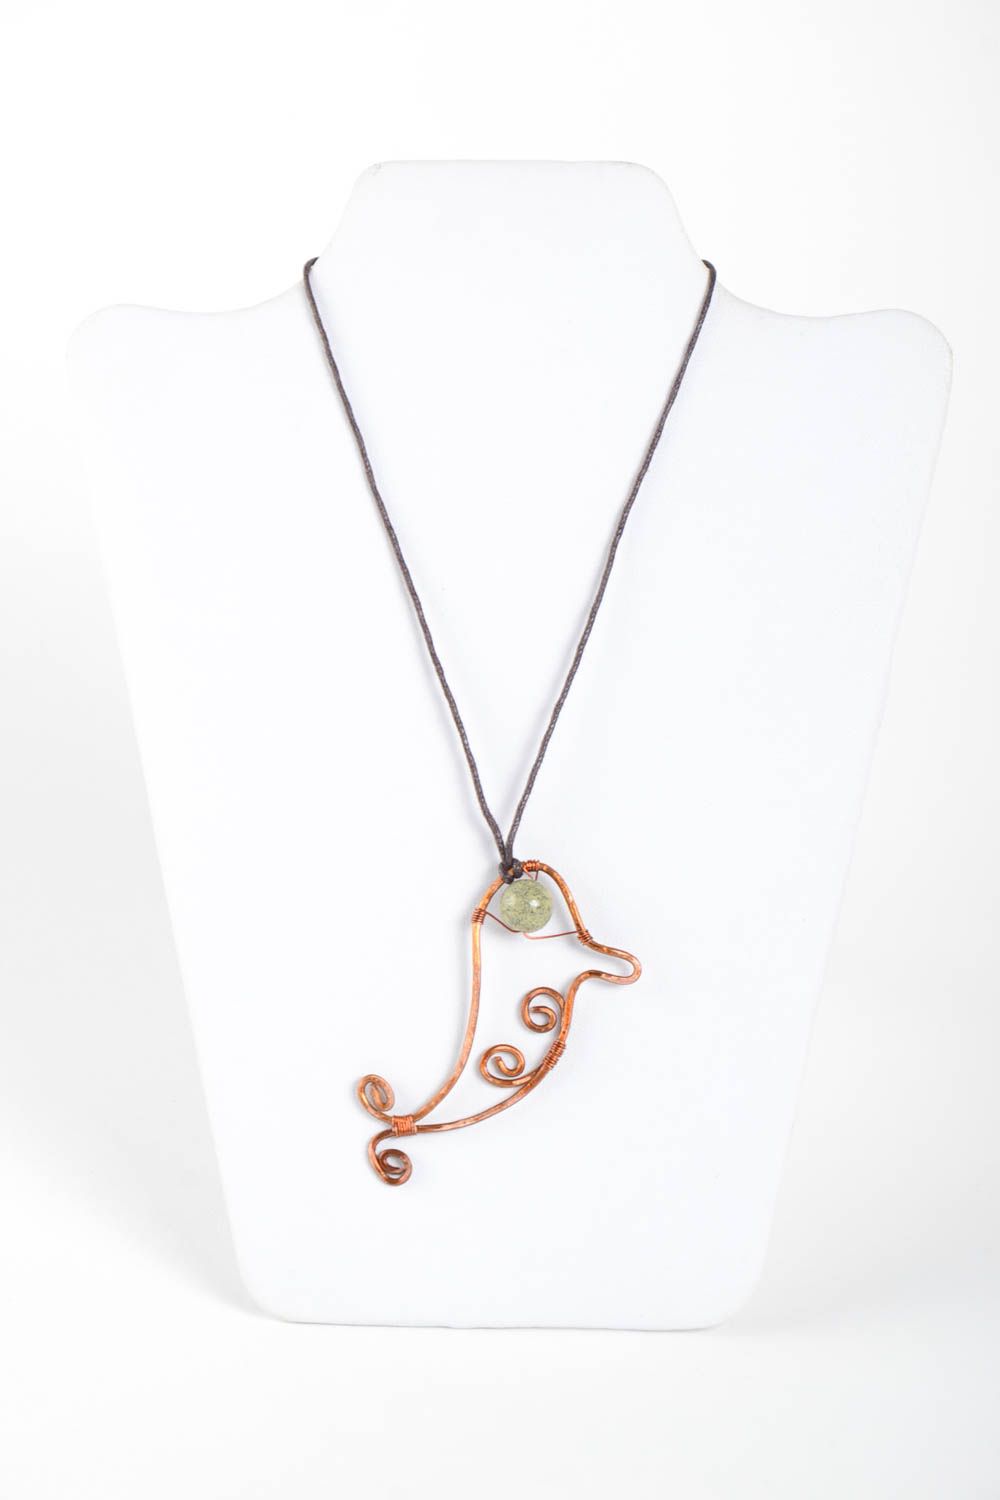 Handmade copper necklace elegant pendant handmade jewelry with natural stones photo 2